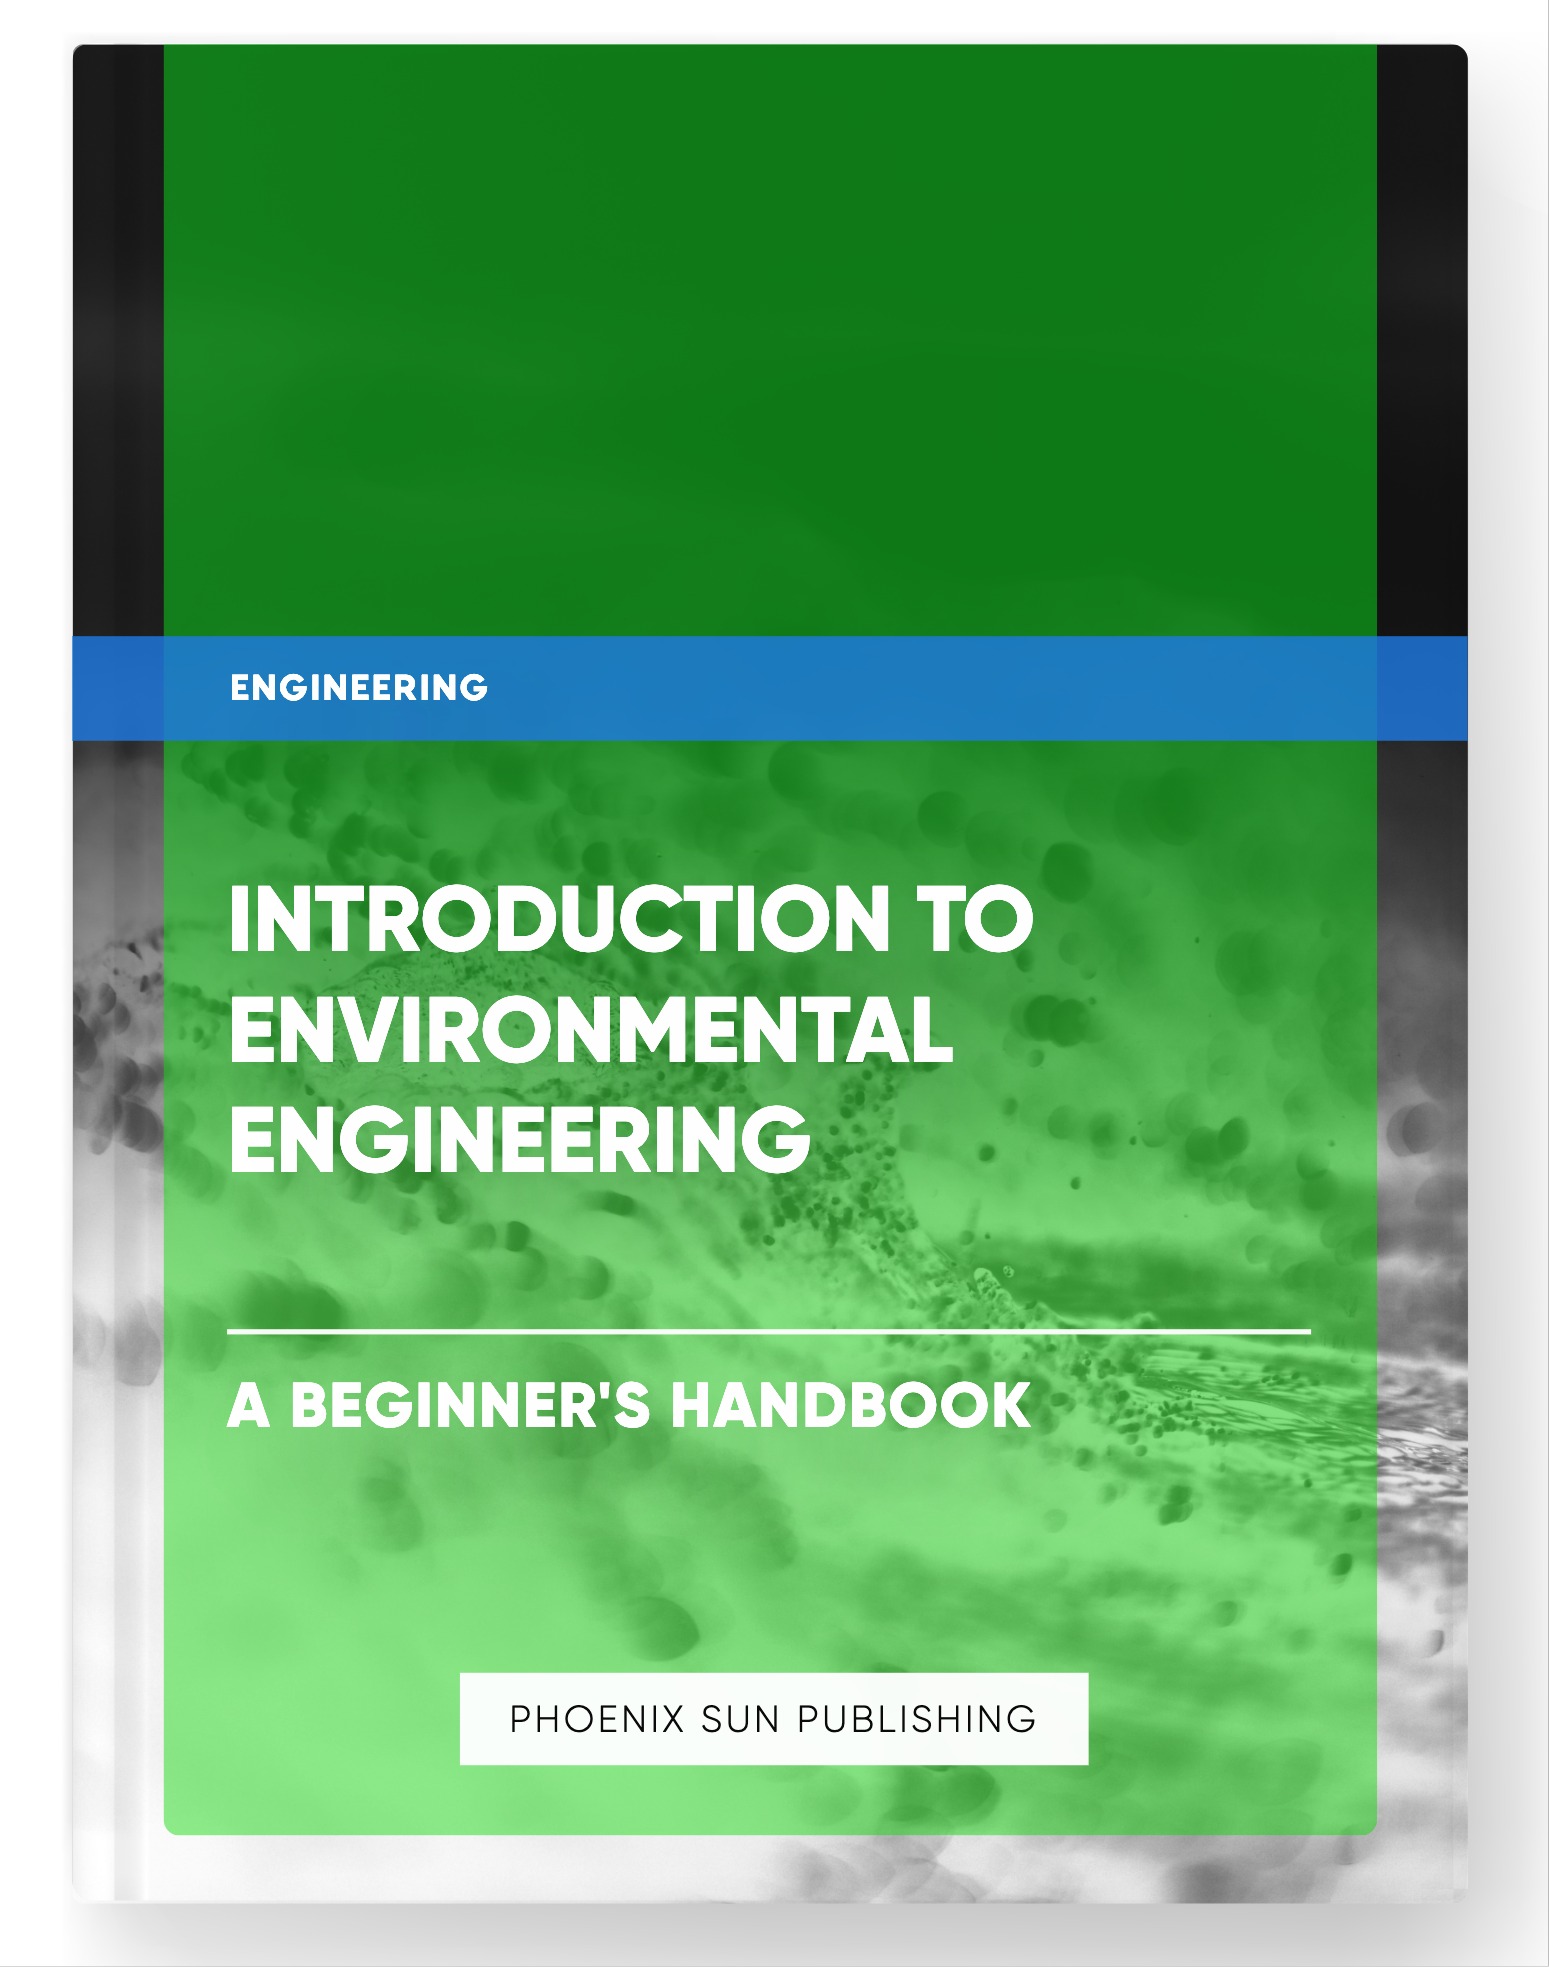 Introduction to Environmental Engineering – A Beginner’s Handbook